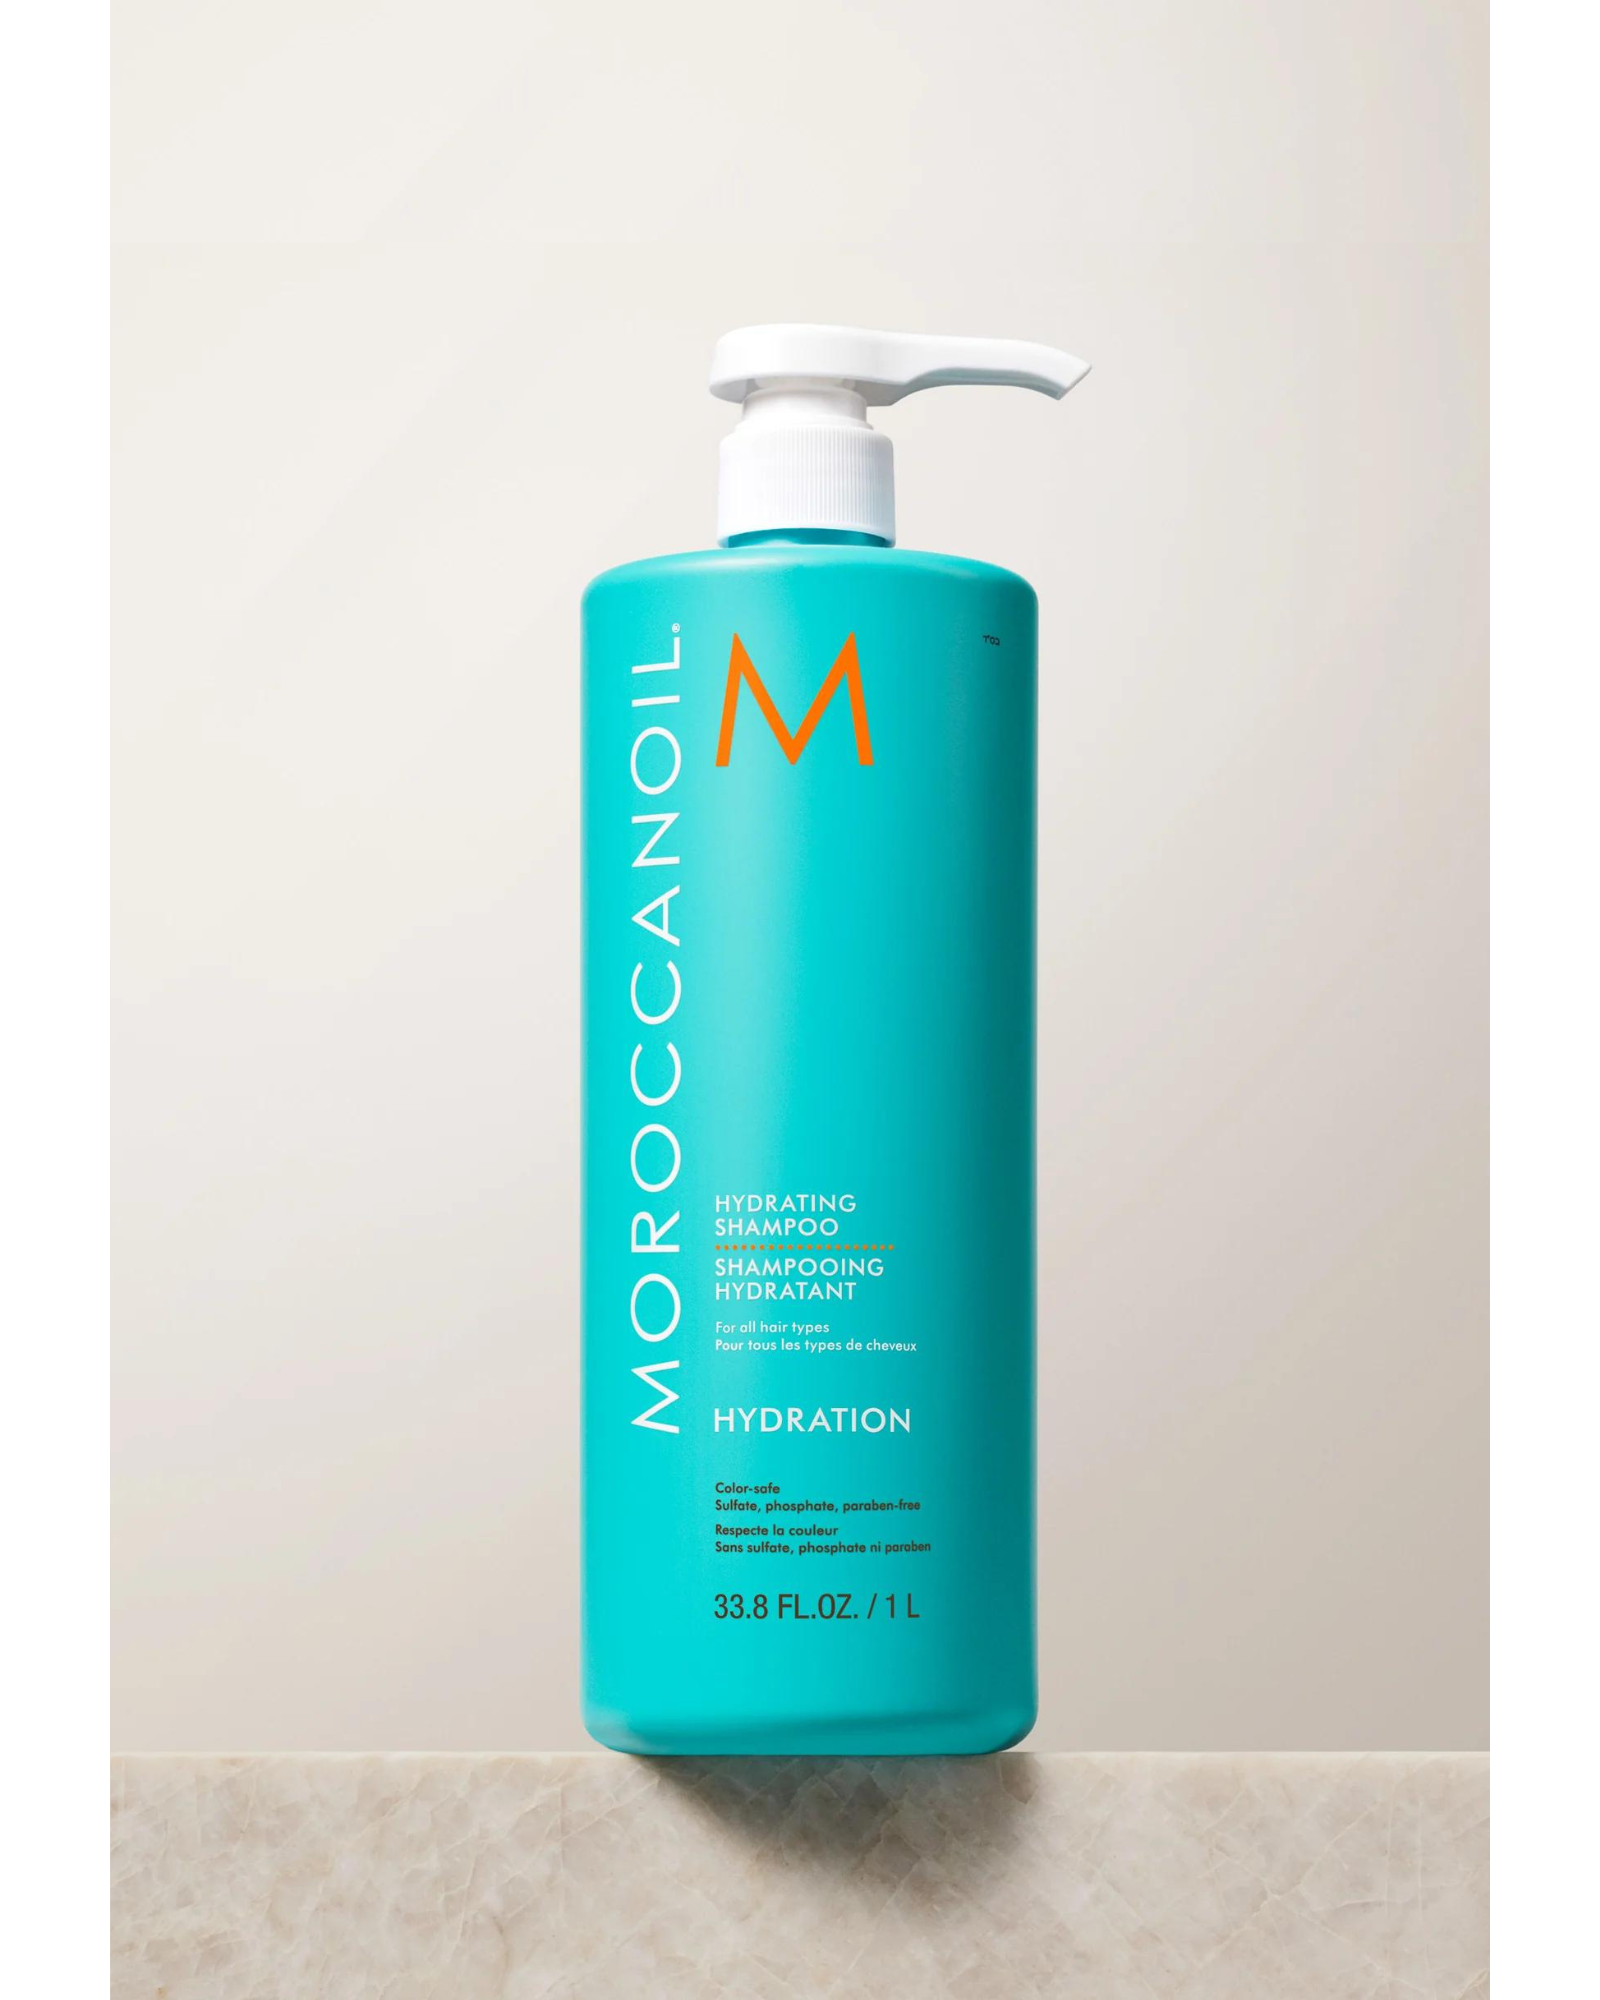 Sulfate-free shampoo (MoroccanOil Hydrating Shampoo)